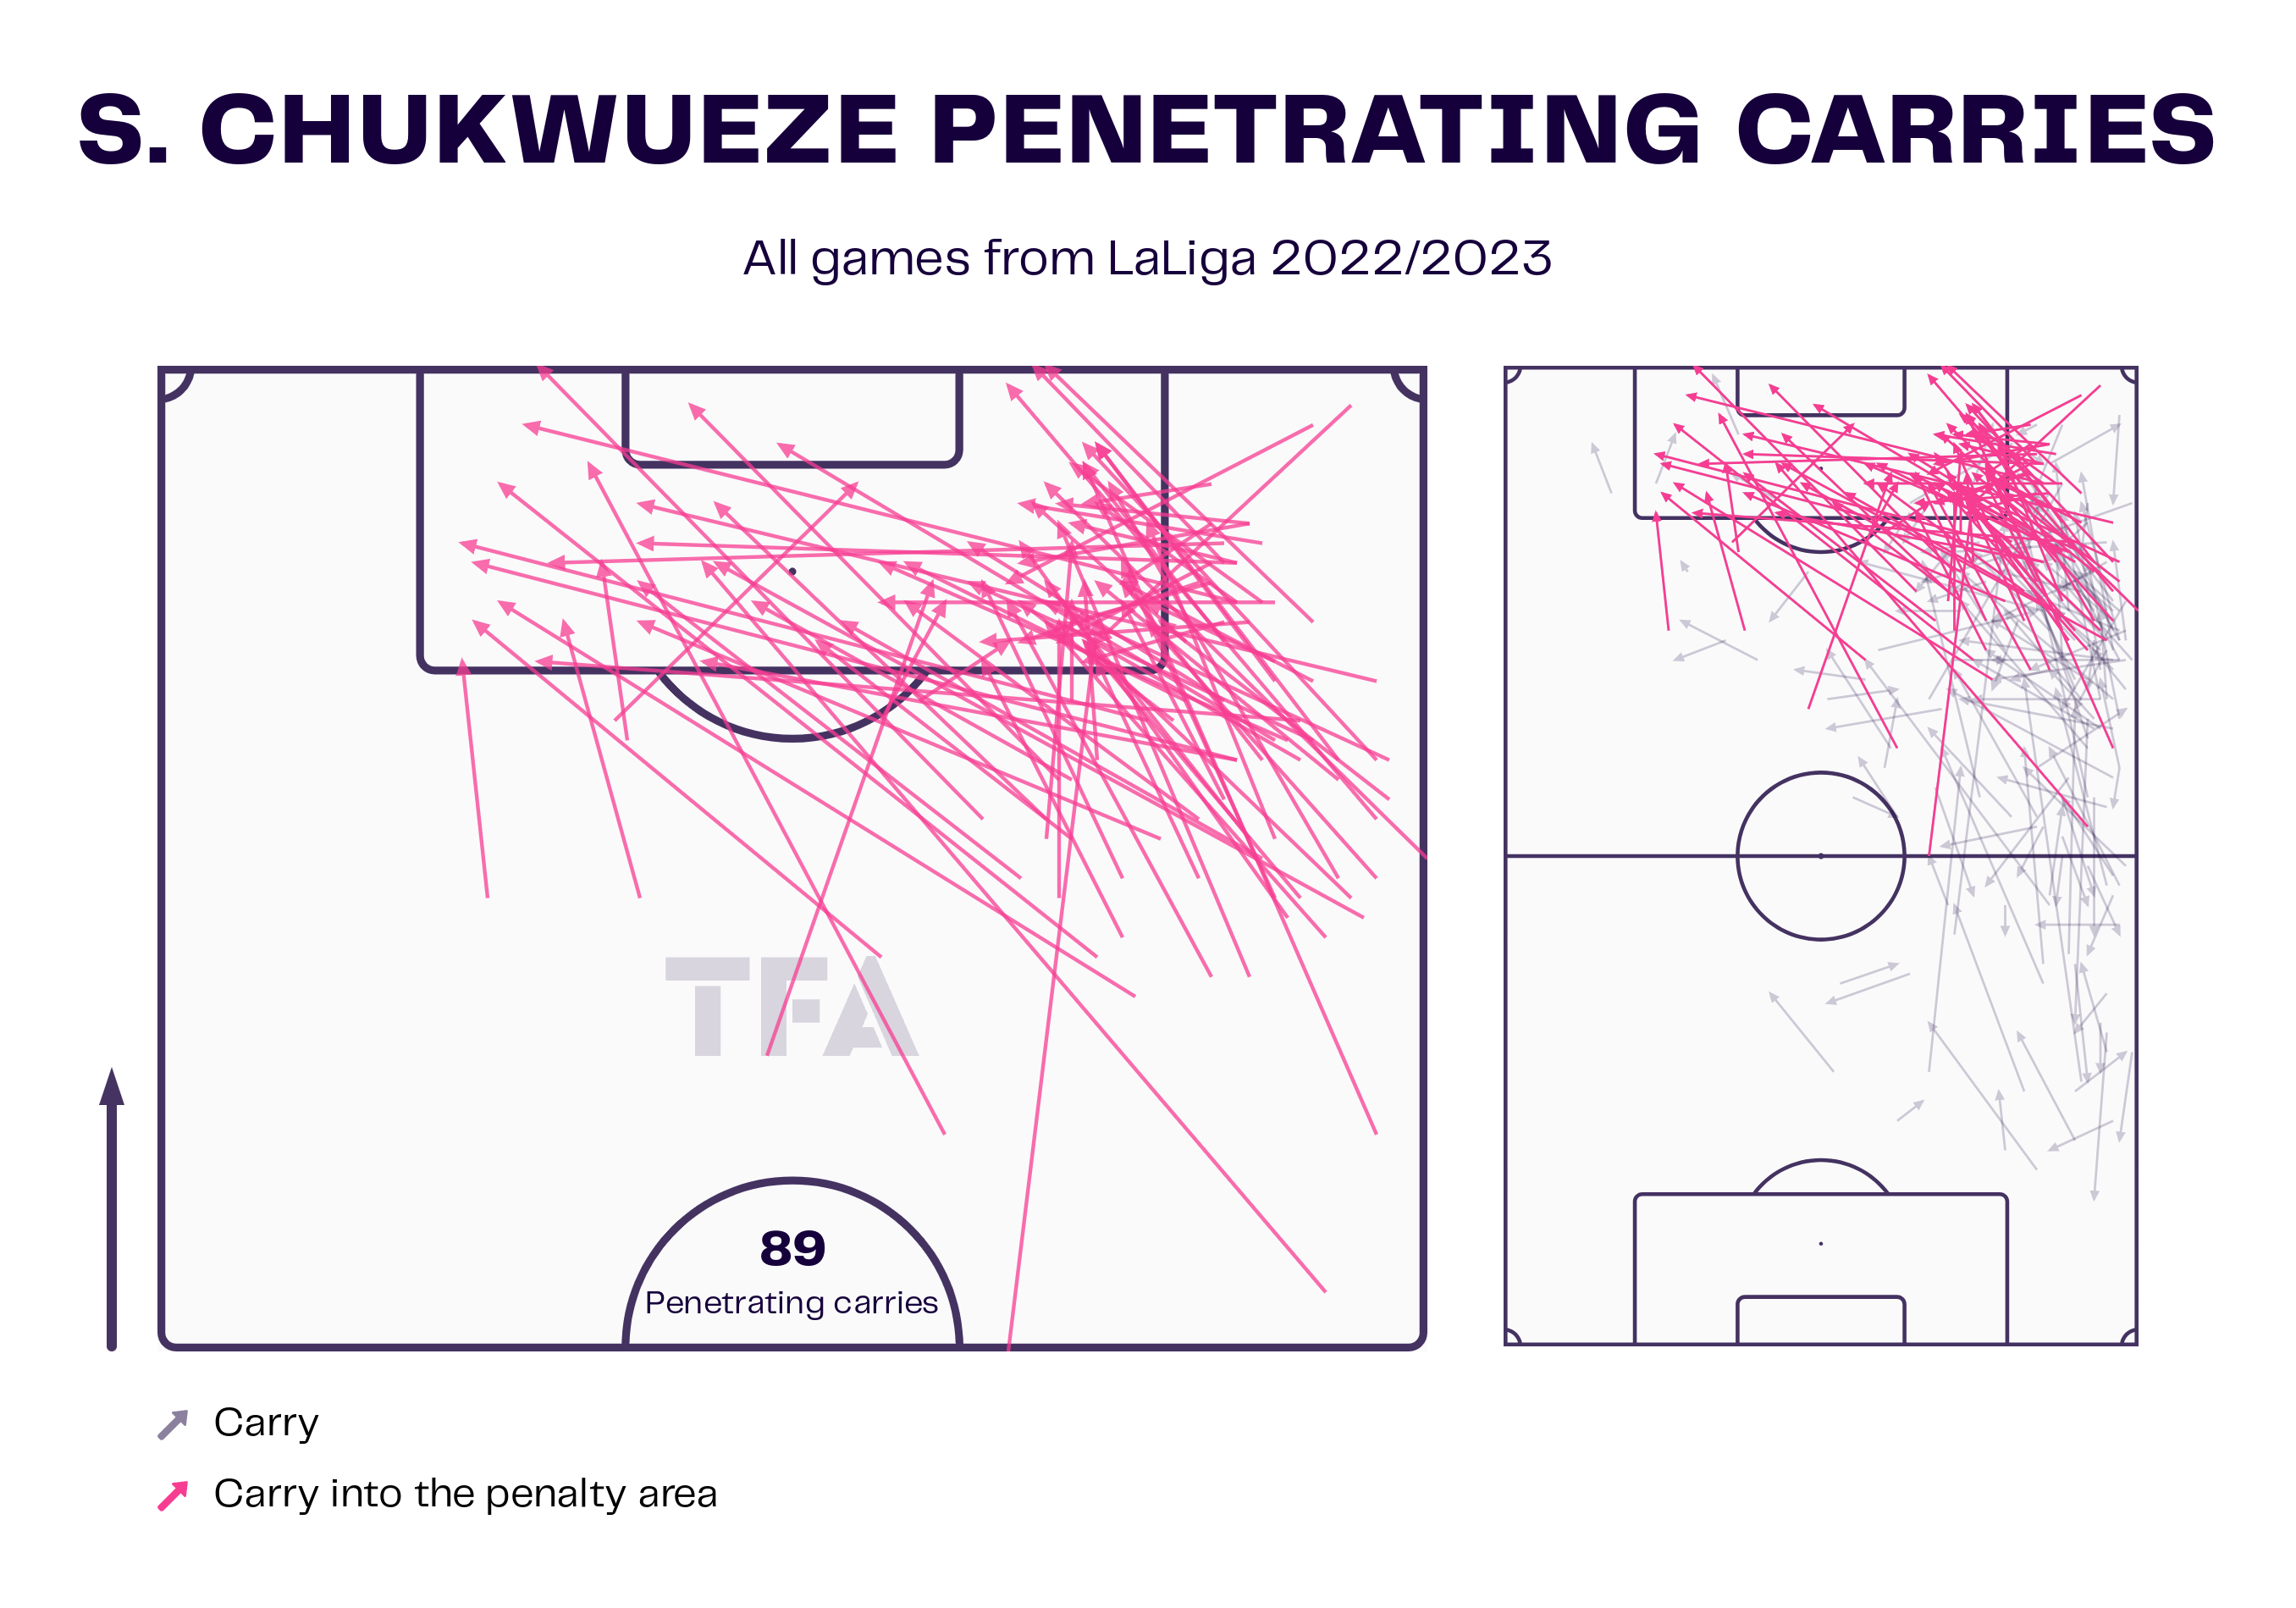 Samuel Chukwueze - Villarreal: La Liga 2022/23 Data, statistics, analysis and scouting report